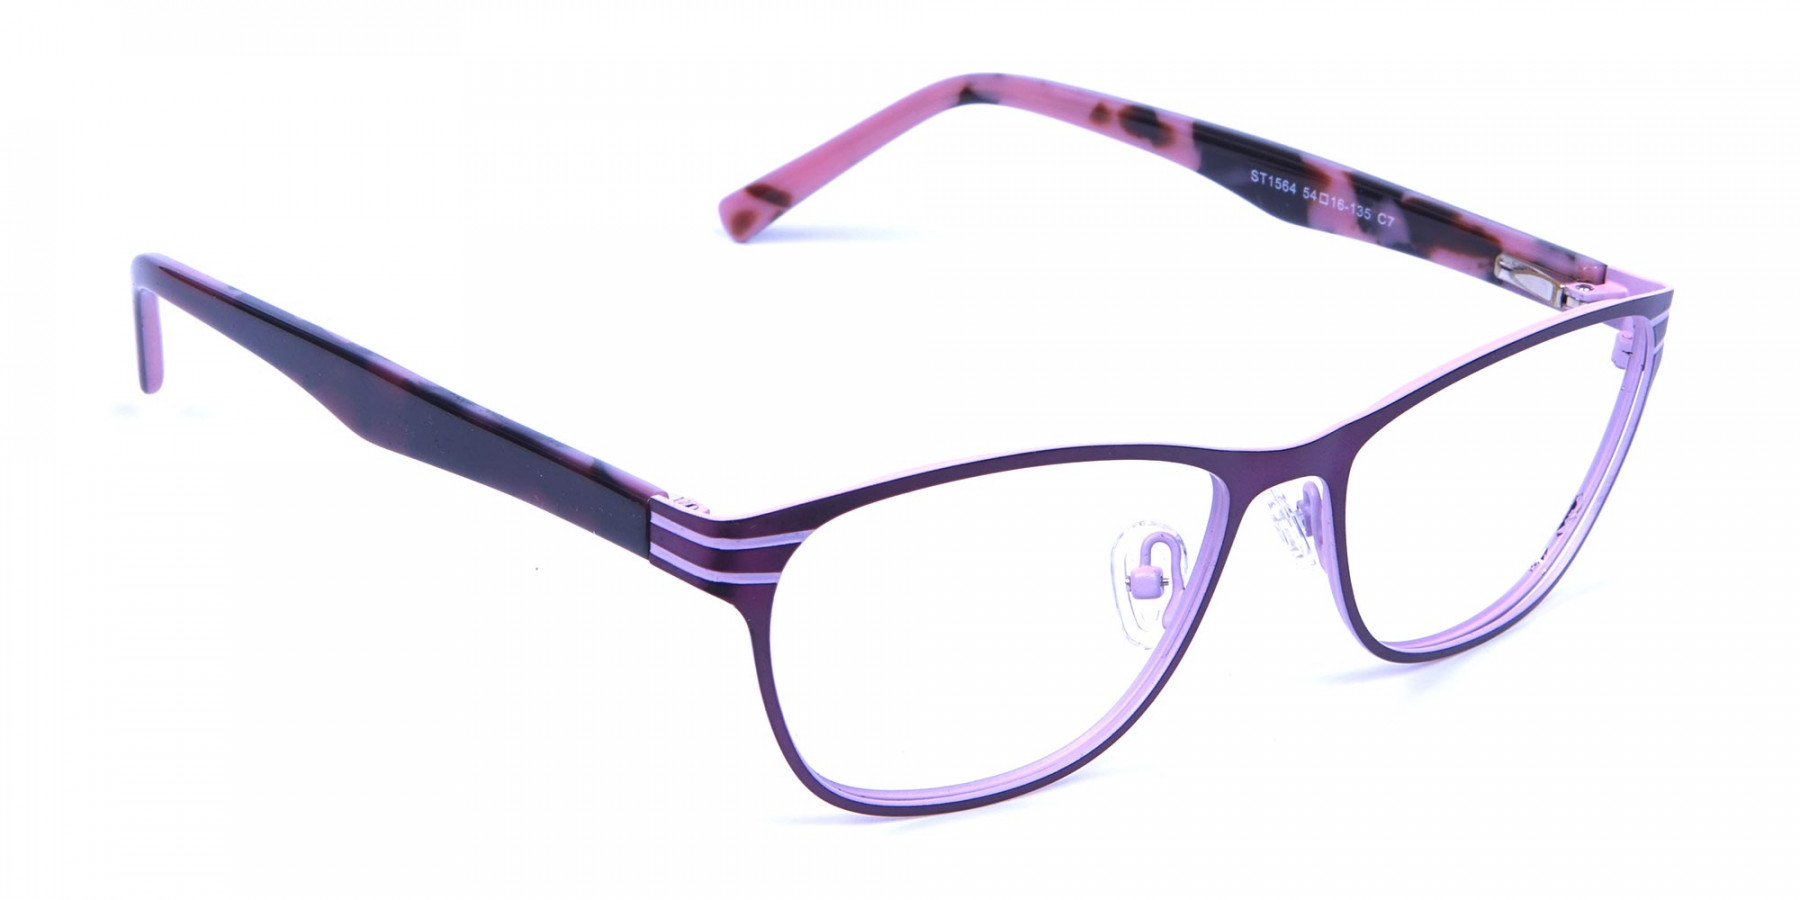 Pink & Black Cat Eye Glasses